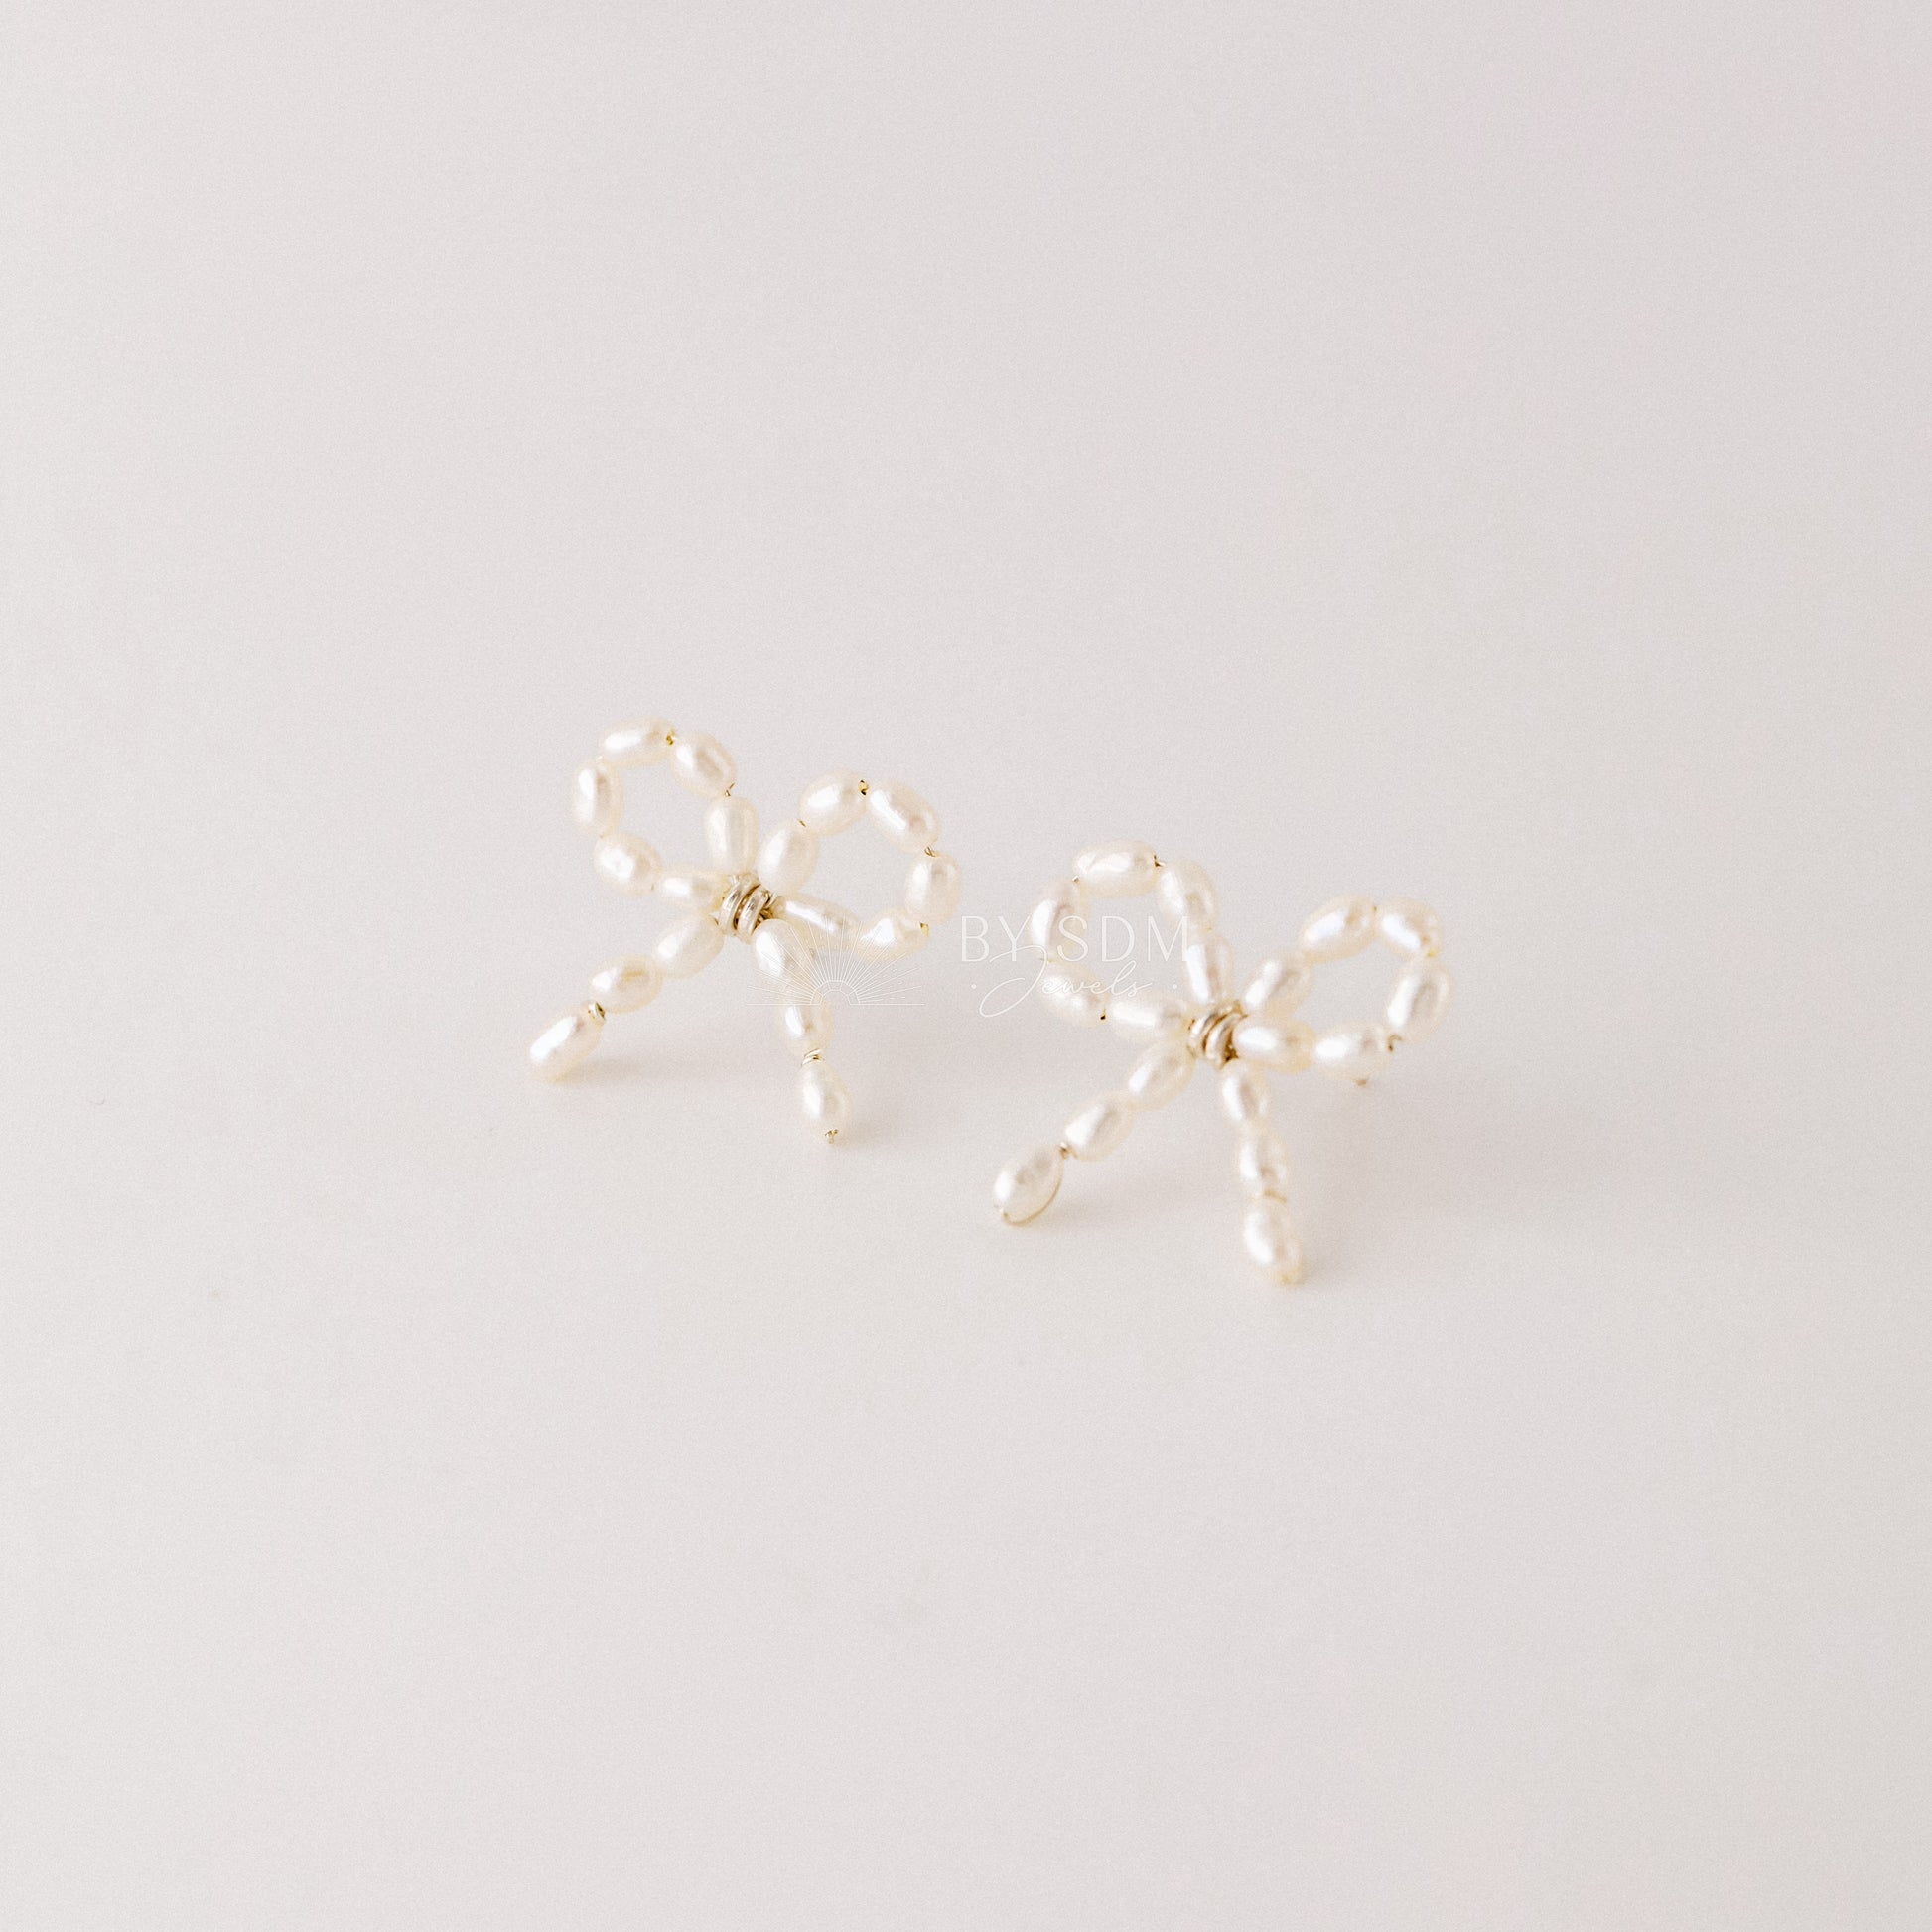 Sterling Silver Pearl Bow Earrings, Freshwater Pearl Earrings, Pearl Jewelry, Bridesmaids Earrings, Gift for Her • BYSDMJEWELS